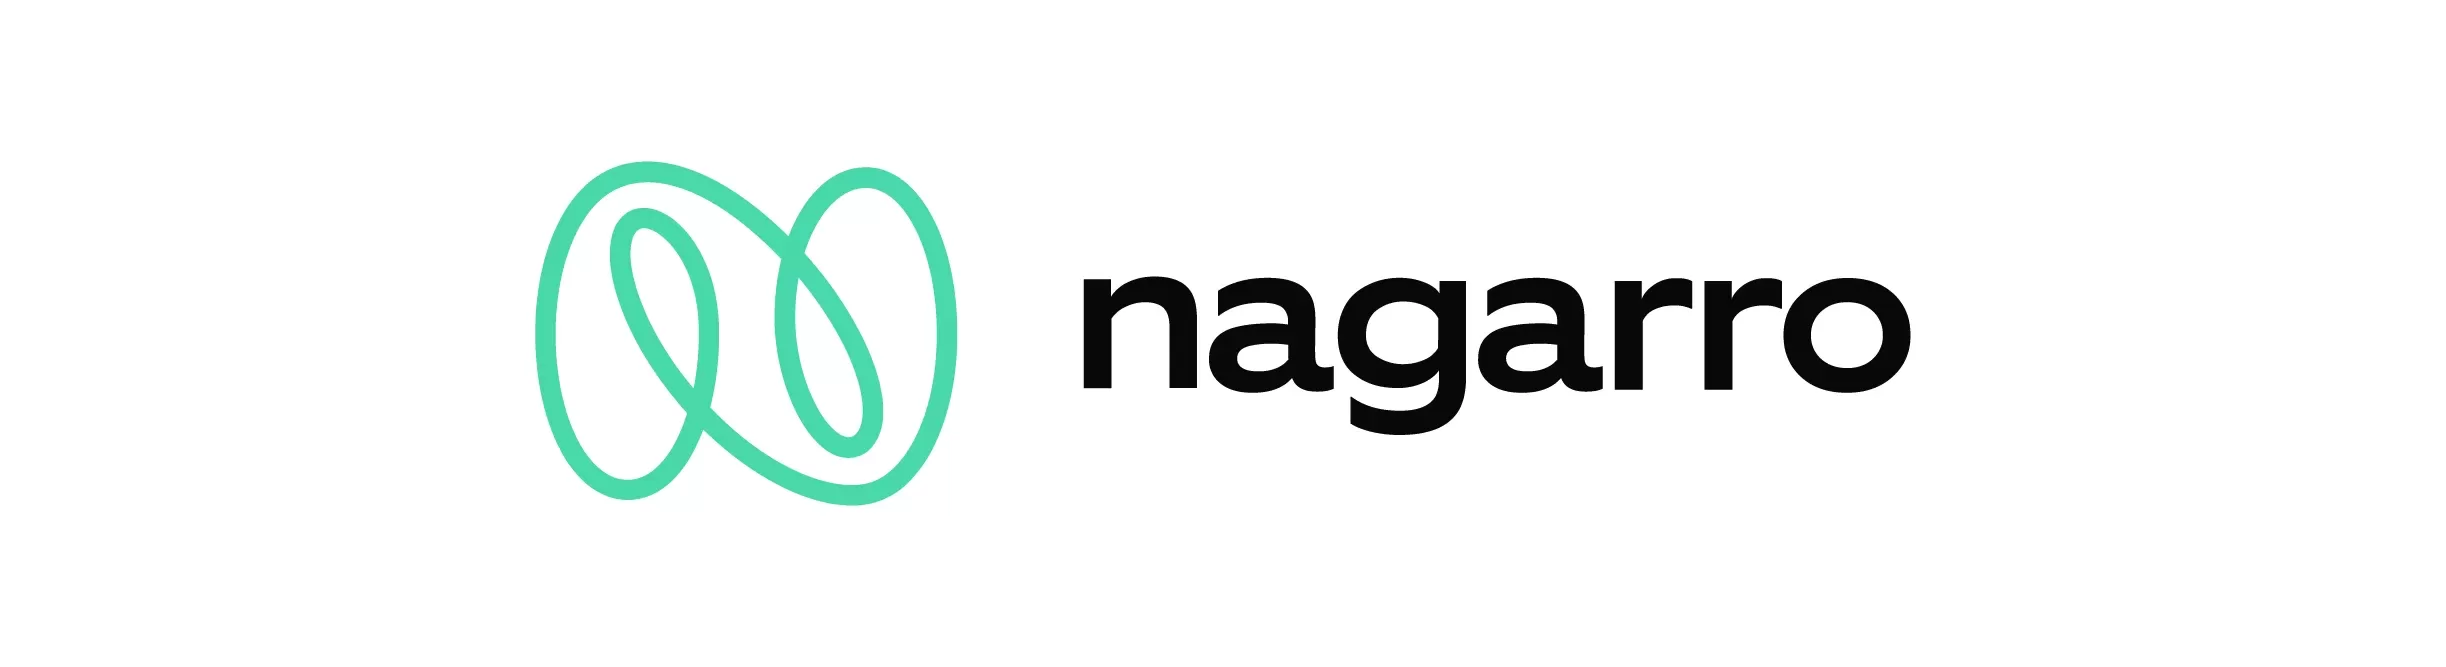 Nagarro - Codecamp